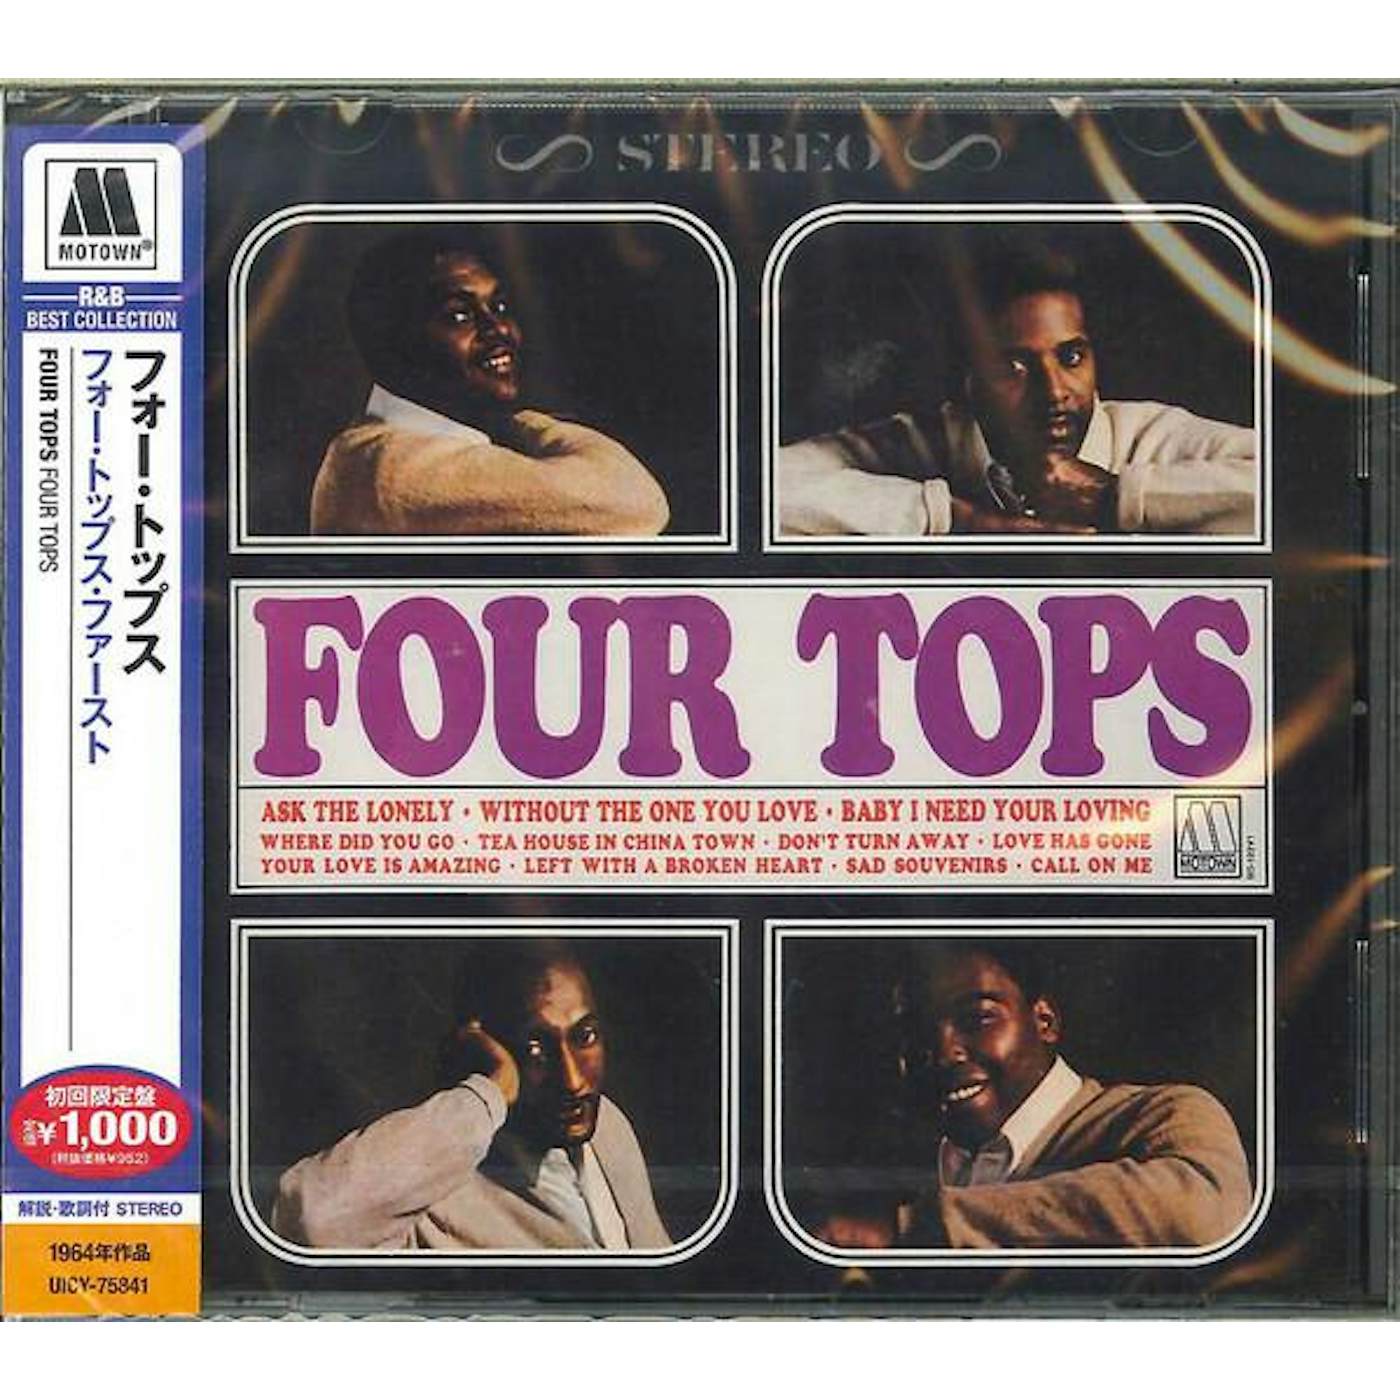 FOUR TOPS CD